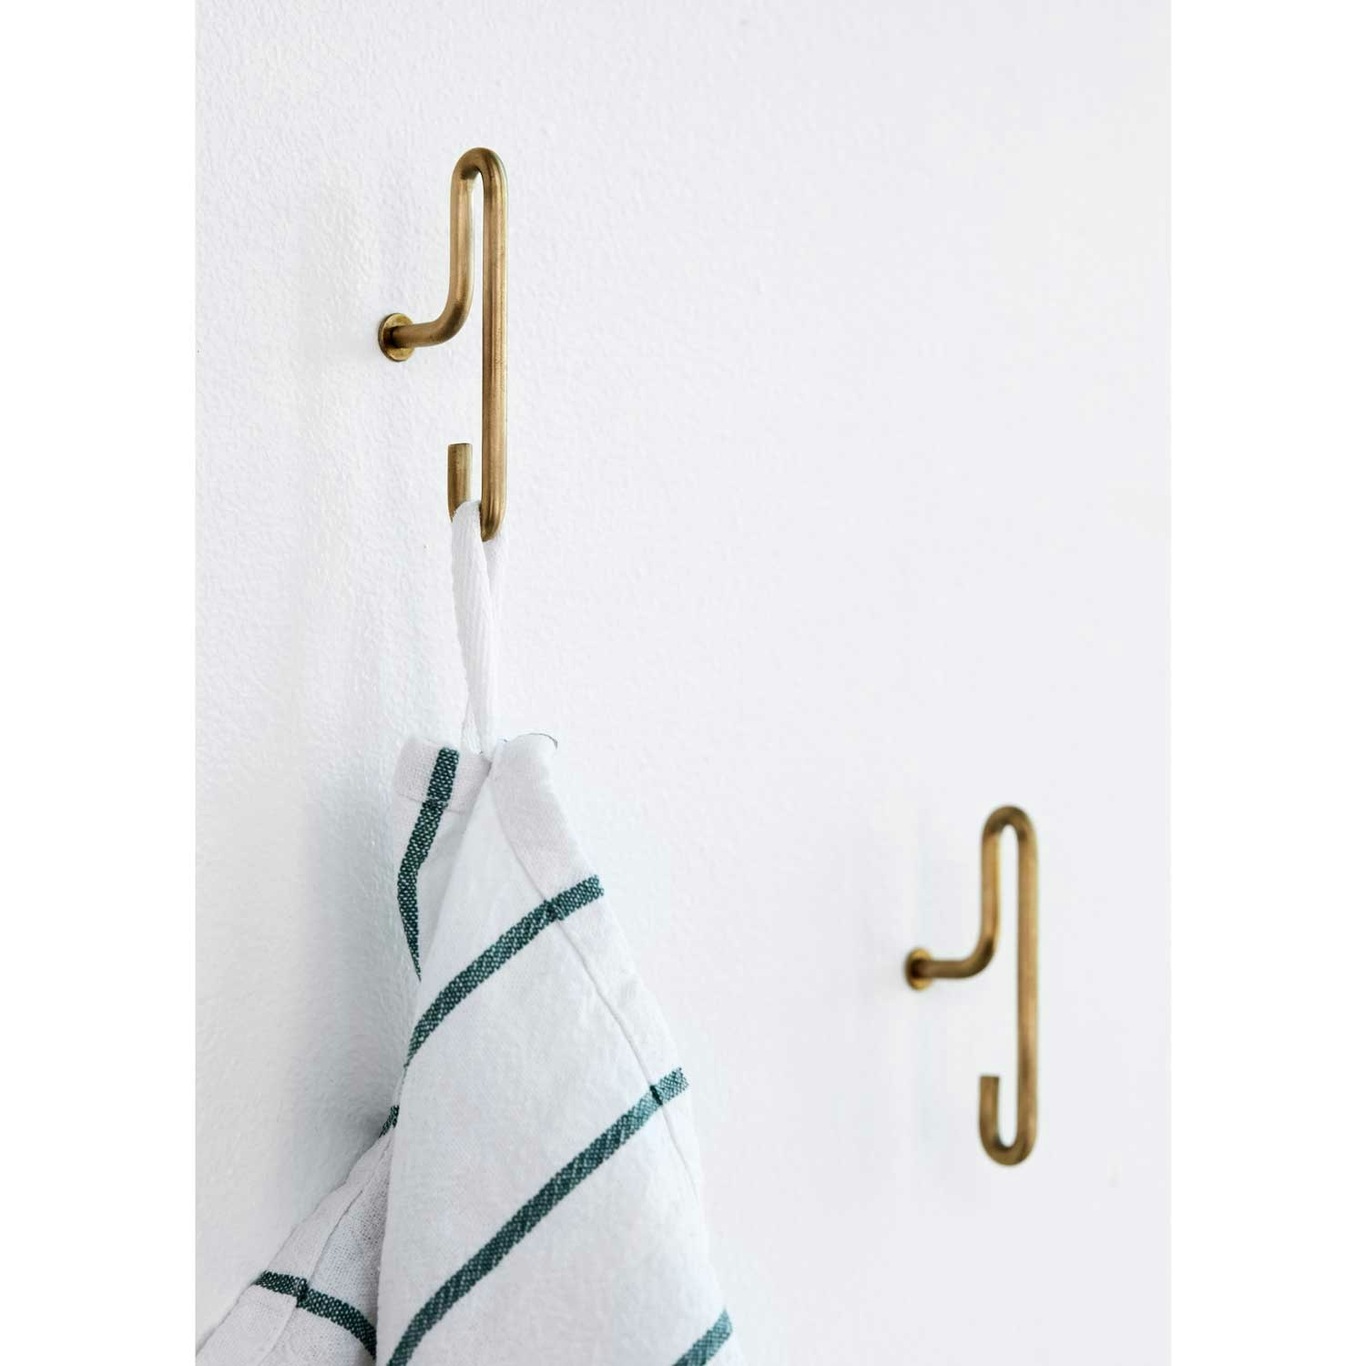 https://royaldesign.com/image/2/moebe-wall-hooks-small-2-pack-matte-gold-4?w=800&quality=80